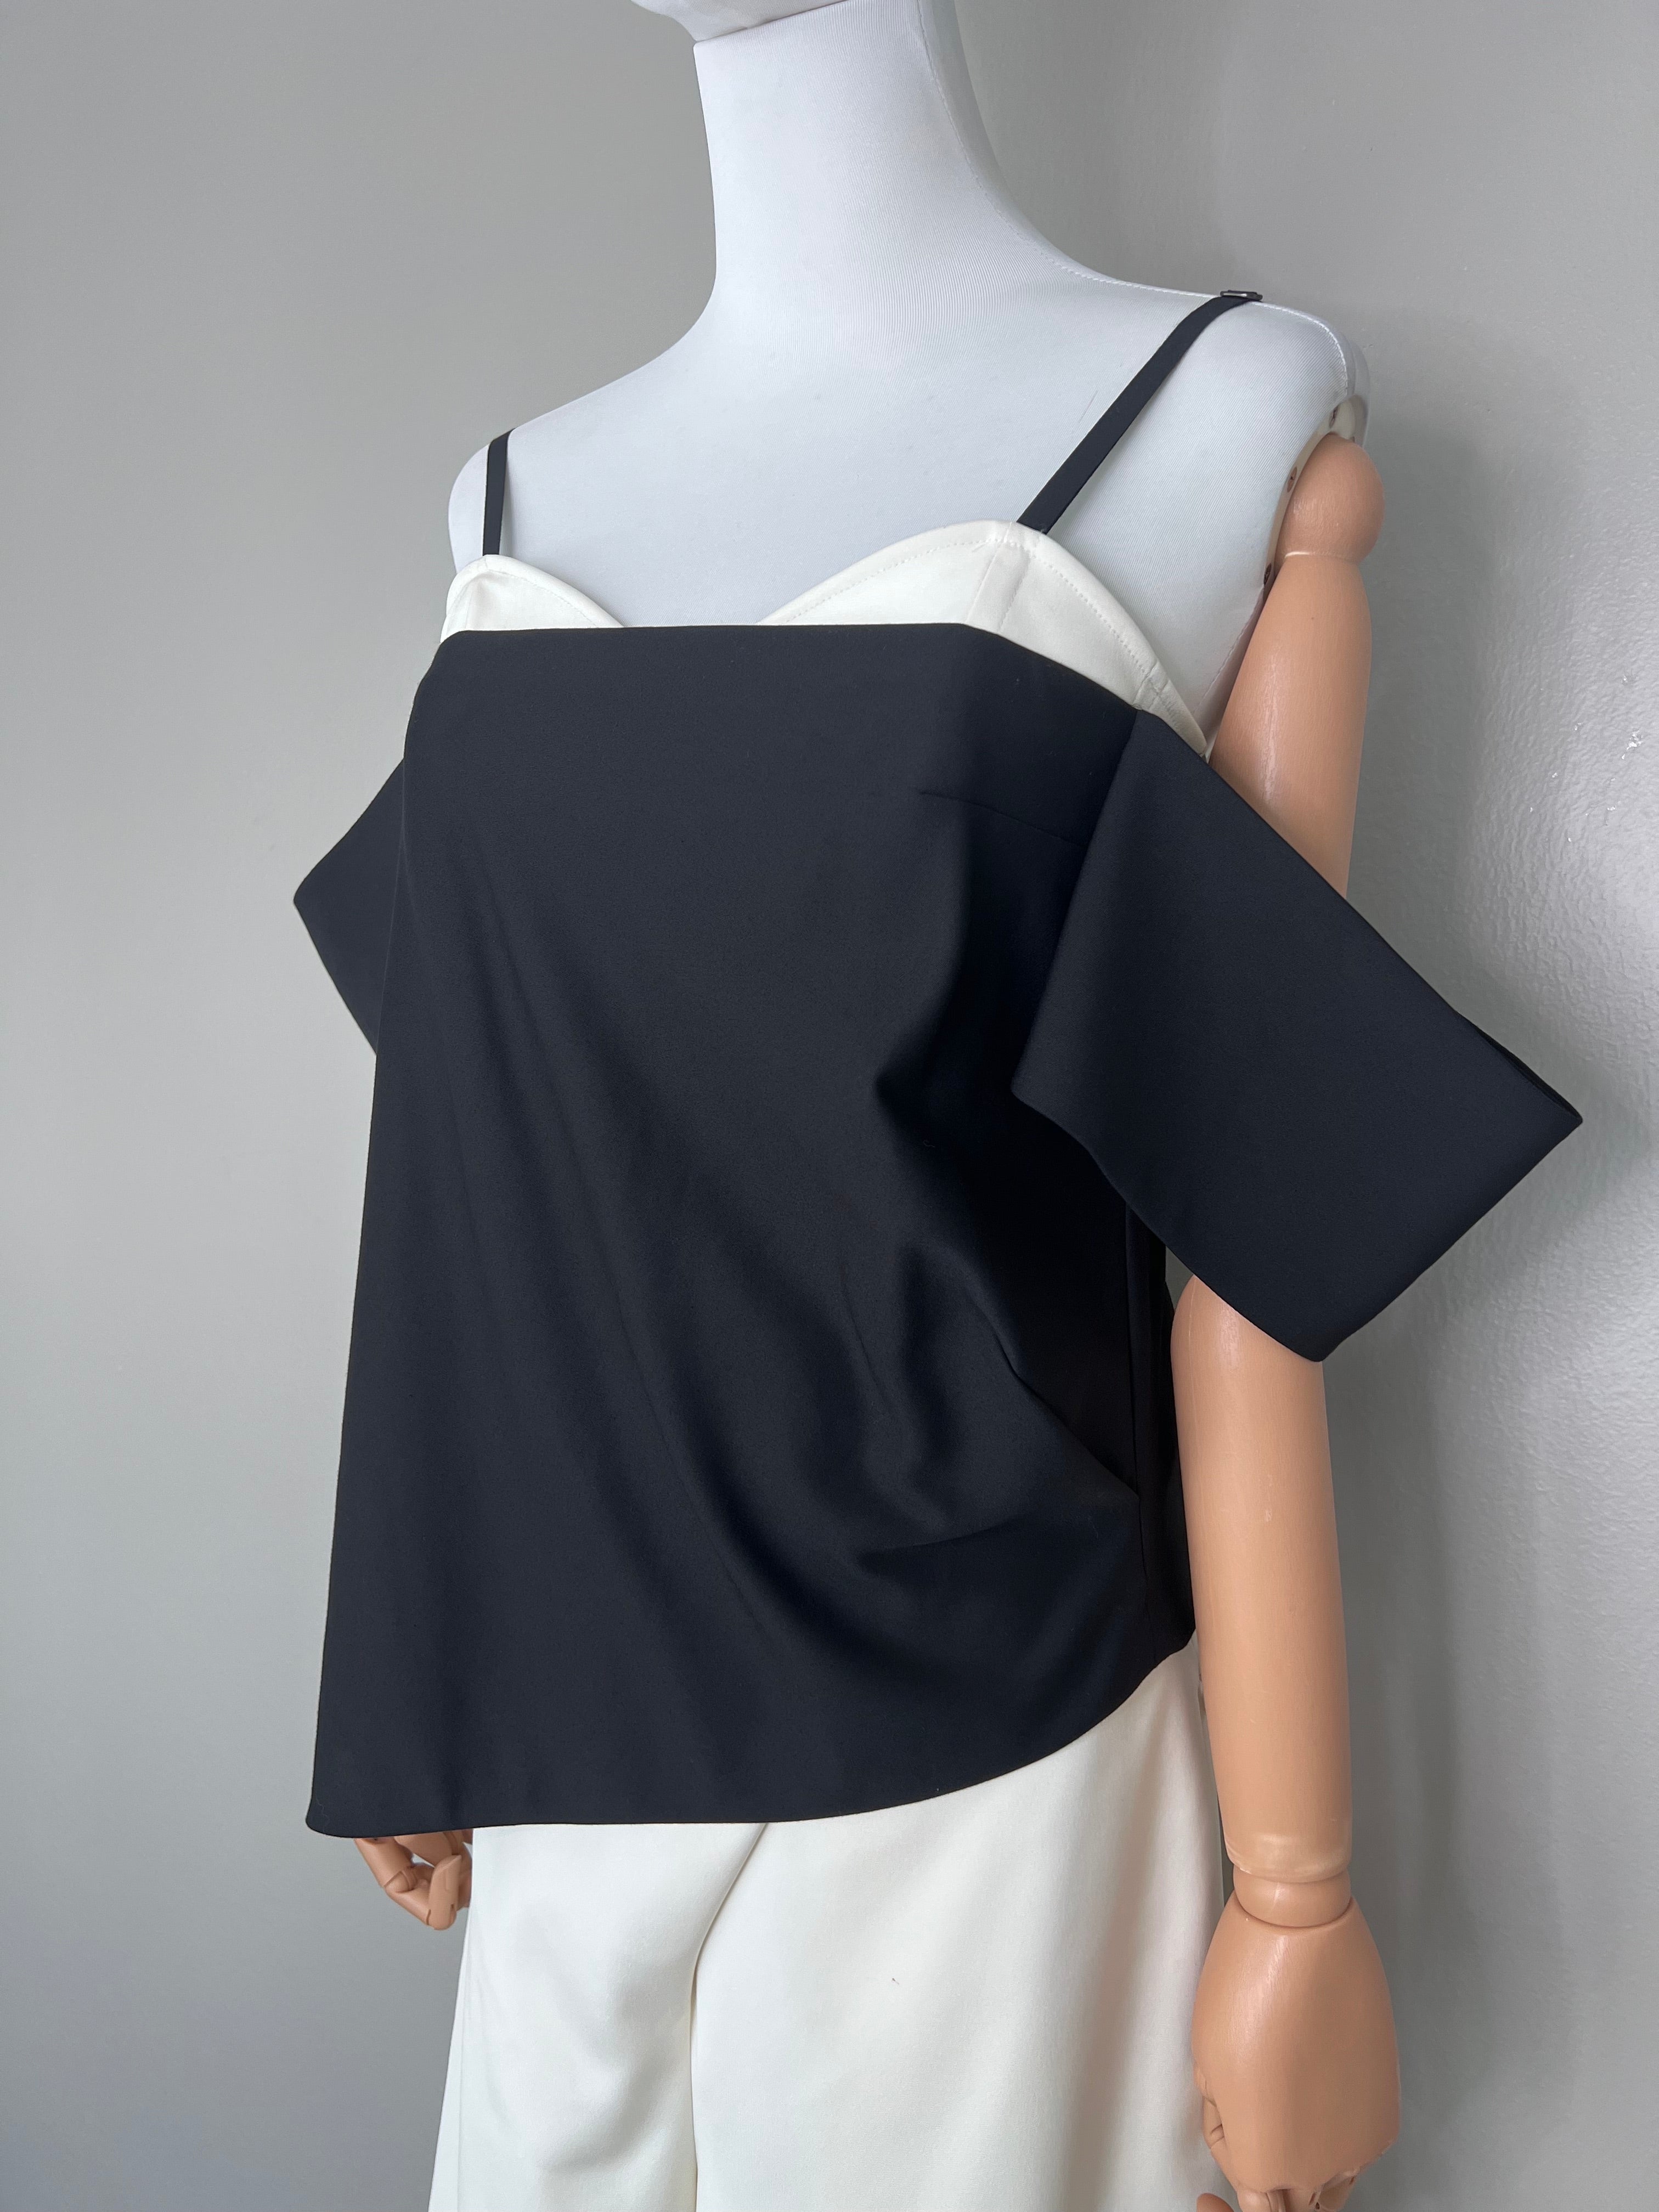 A set of Black halter off-shoulder top with white crossover wide-leg dress pants- TIBI